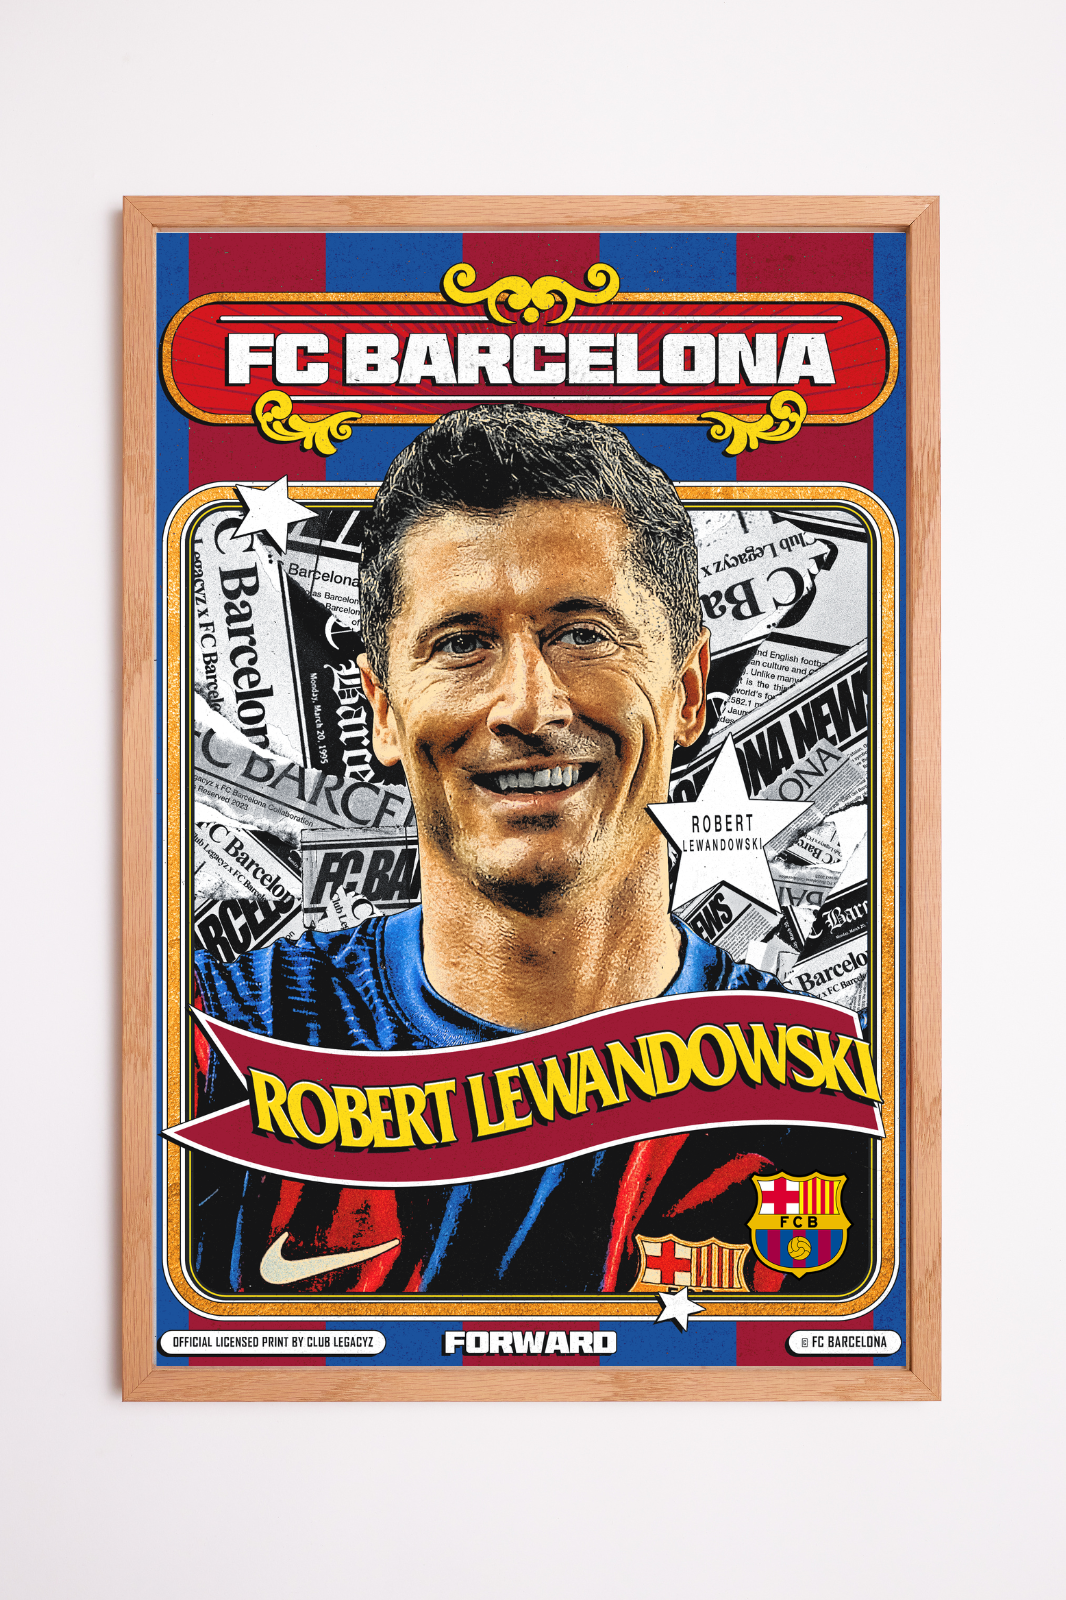 FC Barcelona - Robert Lewandowski Retro Poster limited to 100